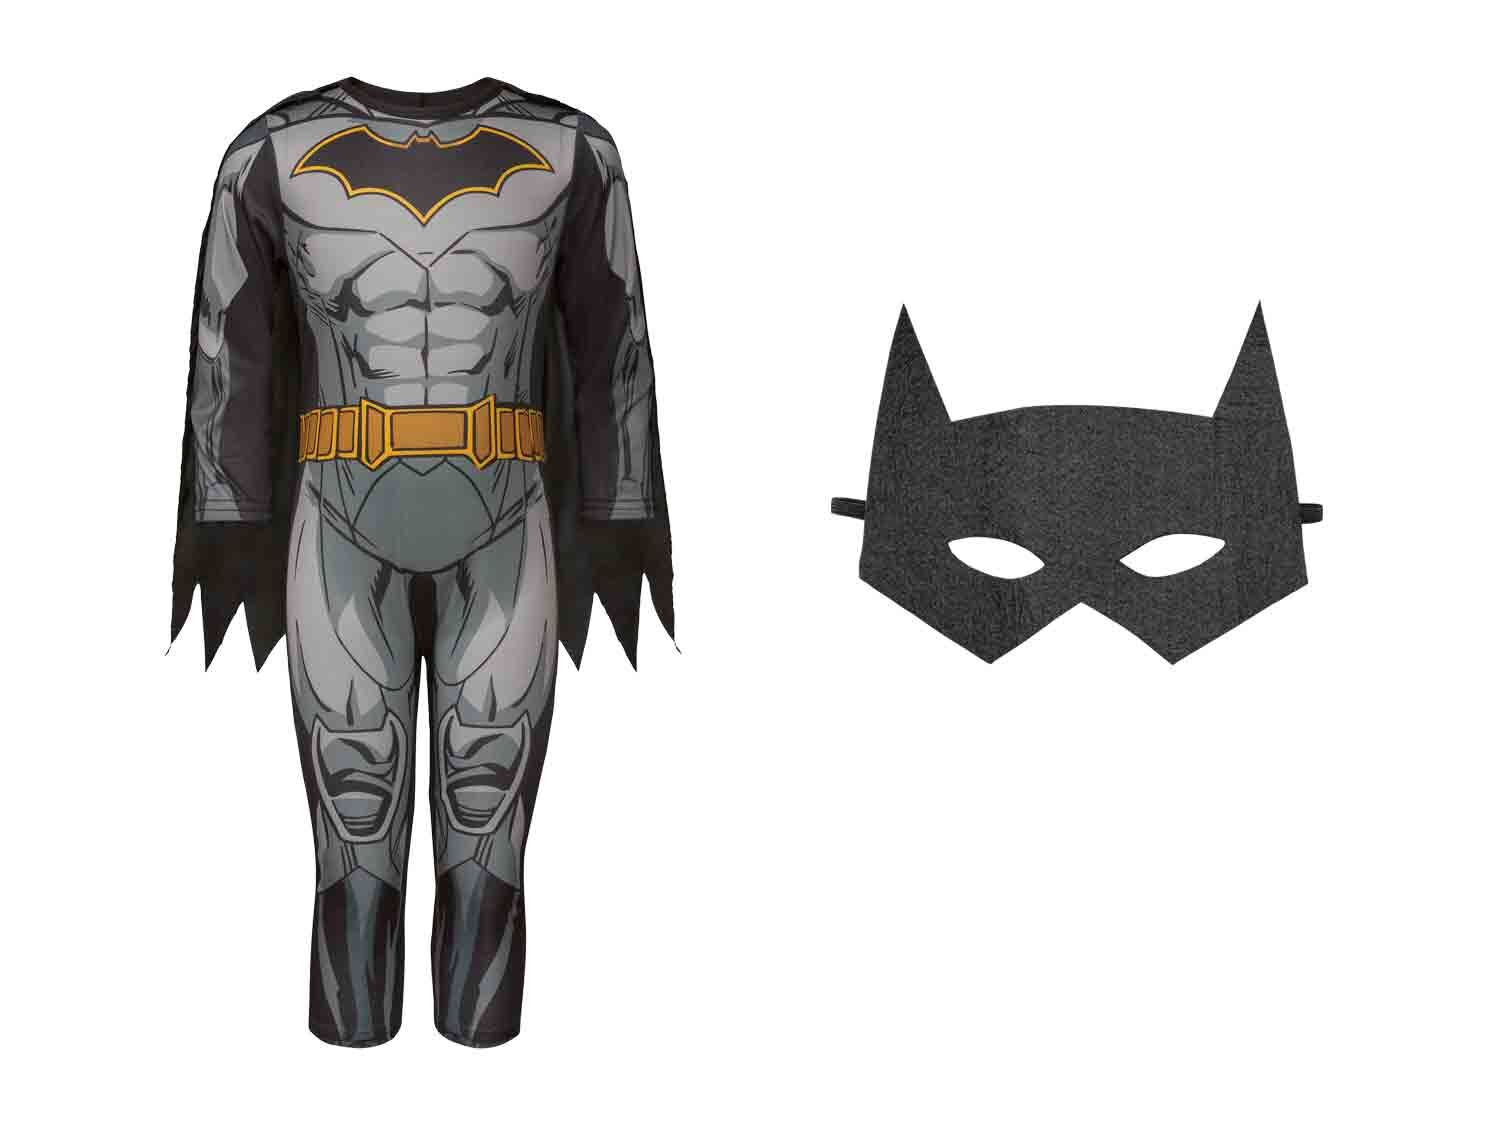 Disfraz de Batman infantil